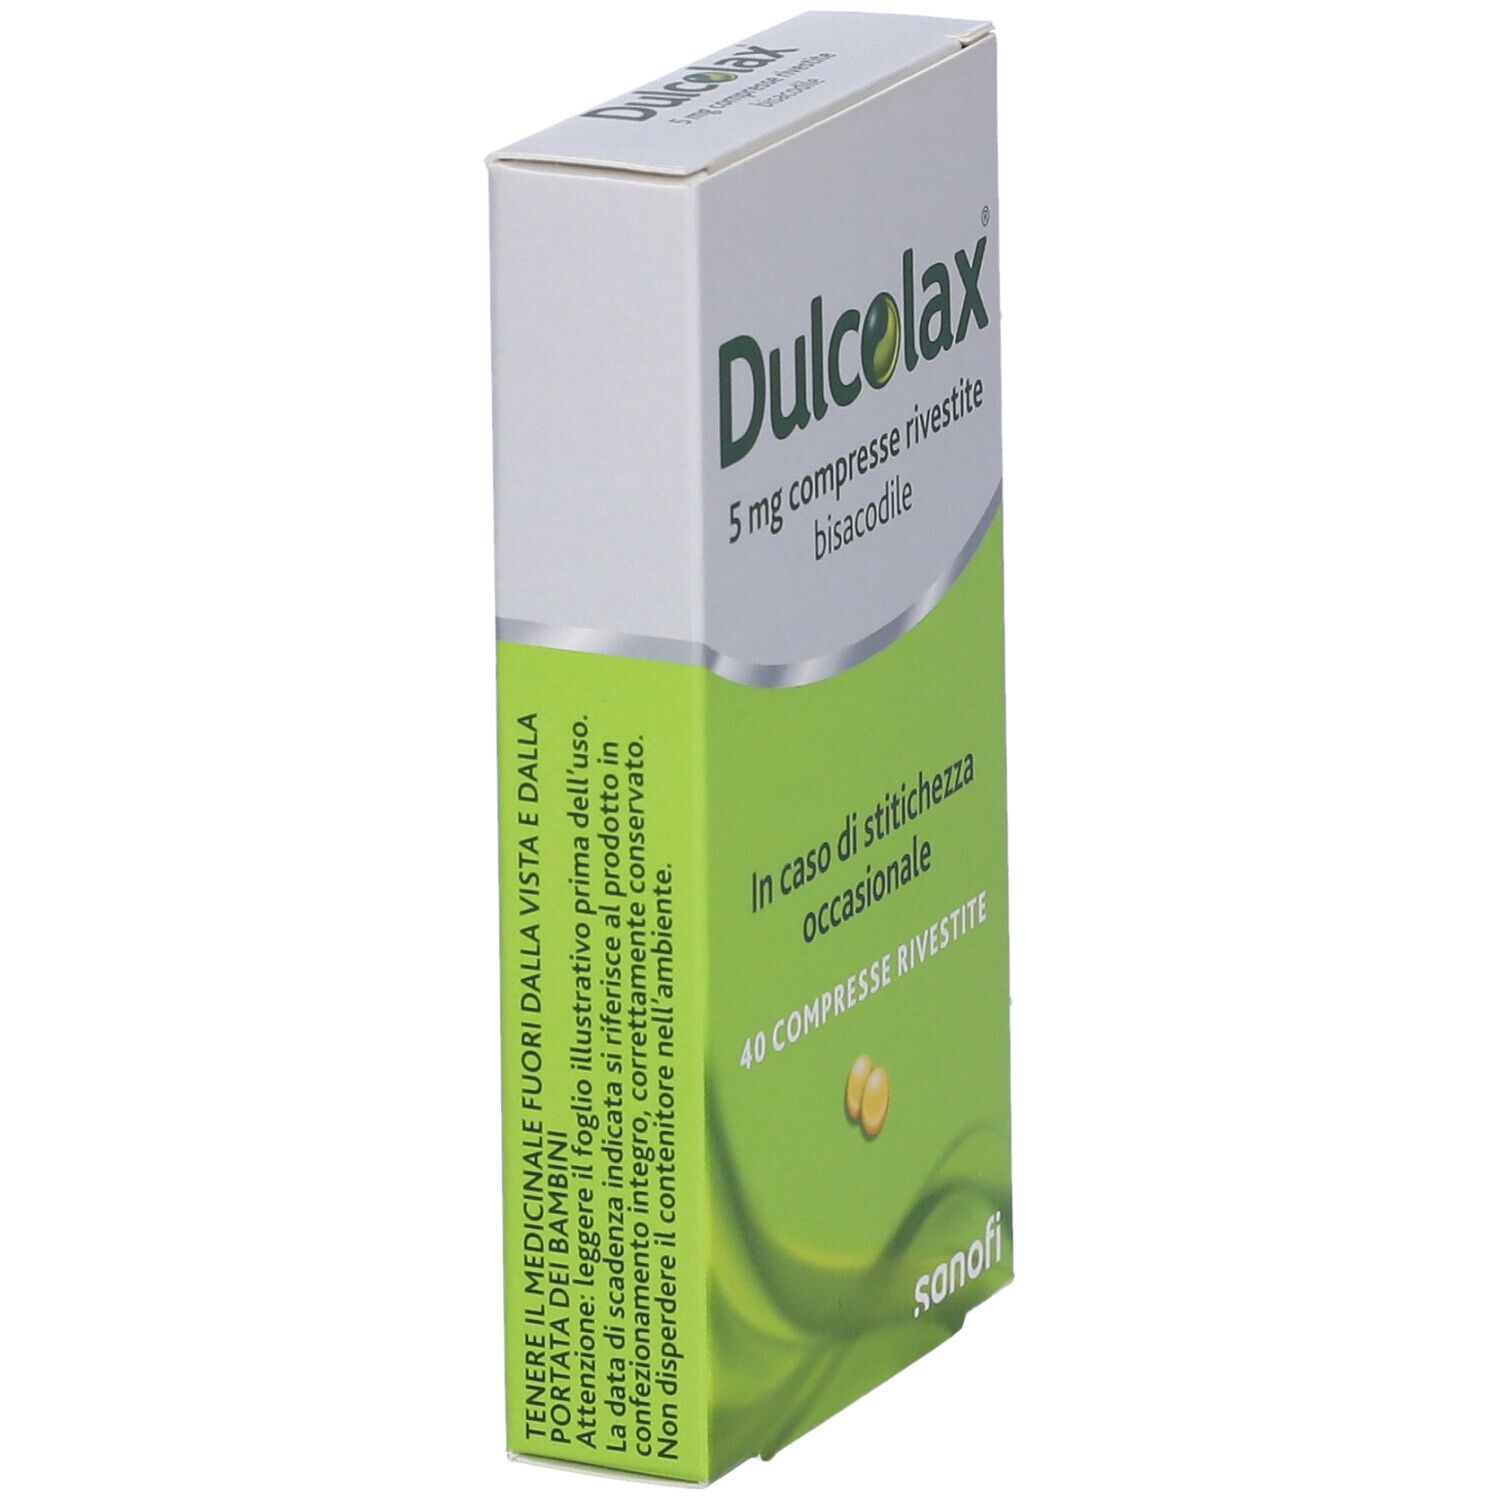 Dulcolax® Compresse rivestite